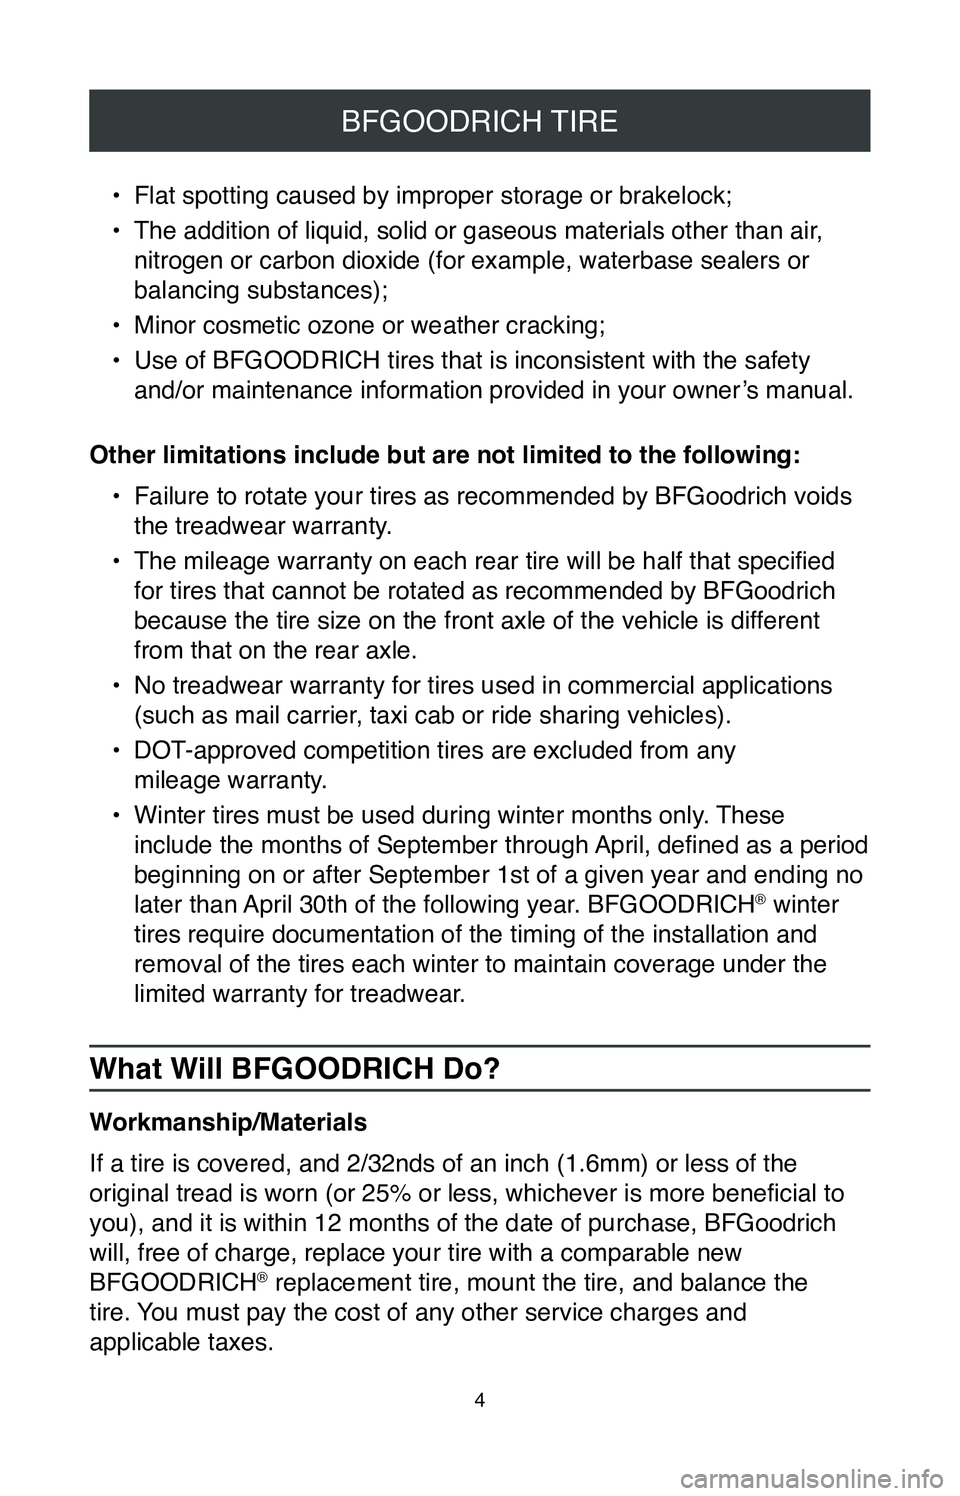 TOYOTA YARIS 2020  Warranties & Maintenance Guides (in English) 4
BFGOODRICH TIRE
